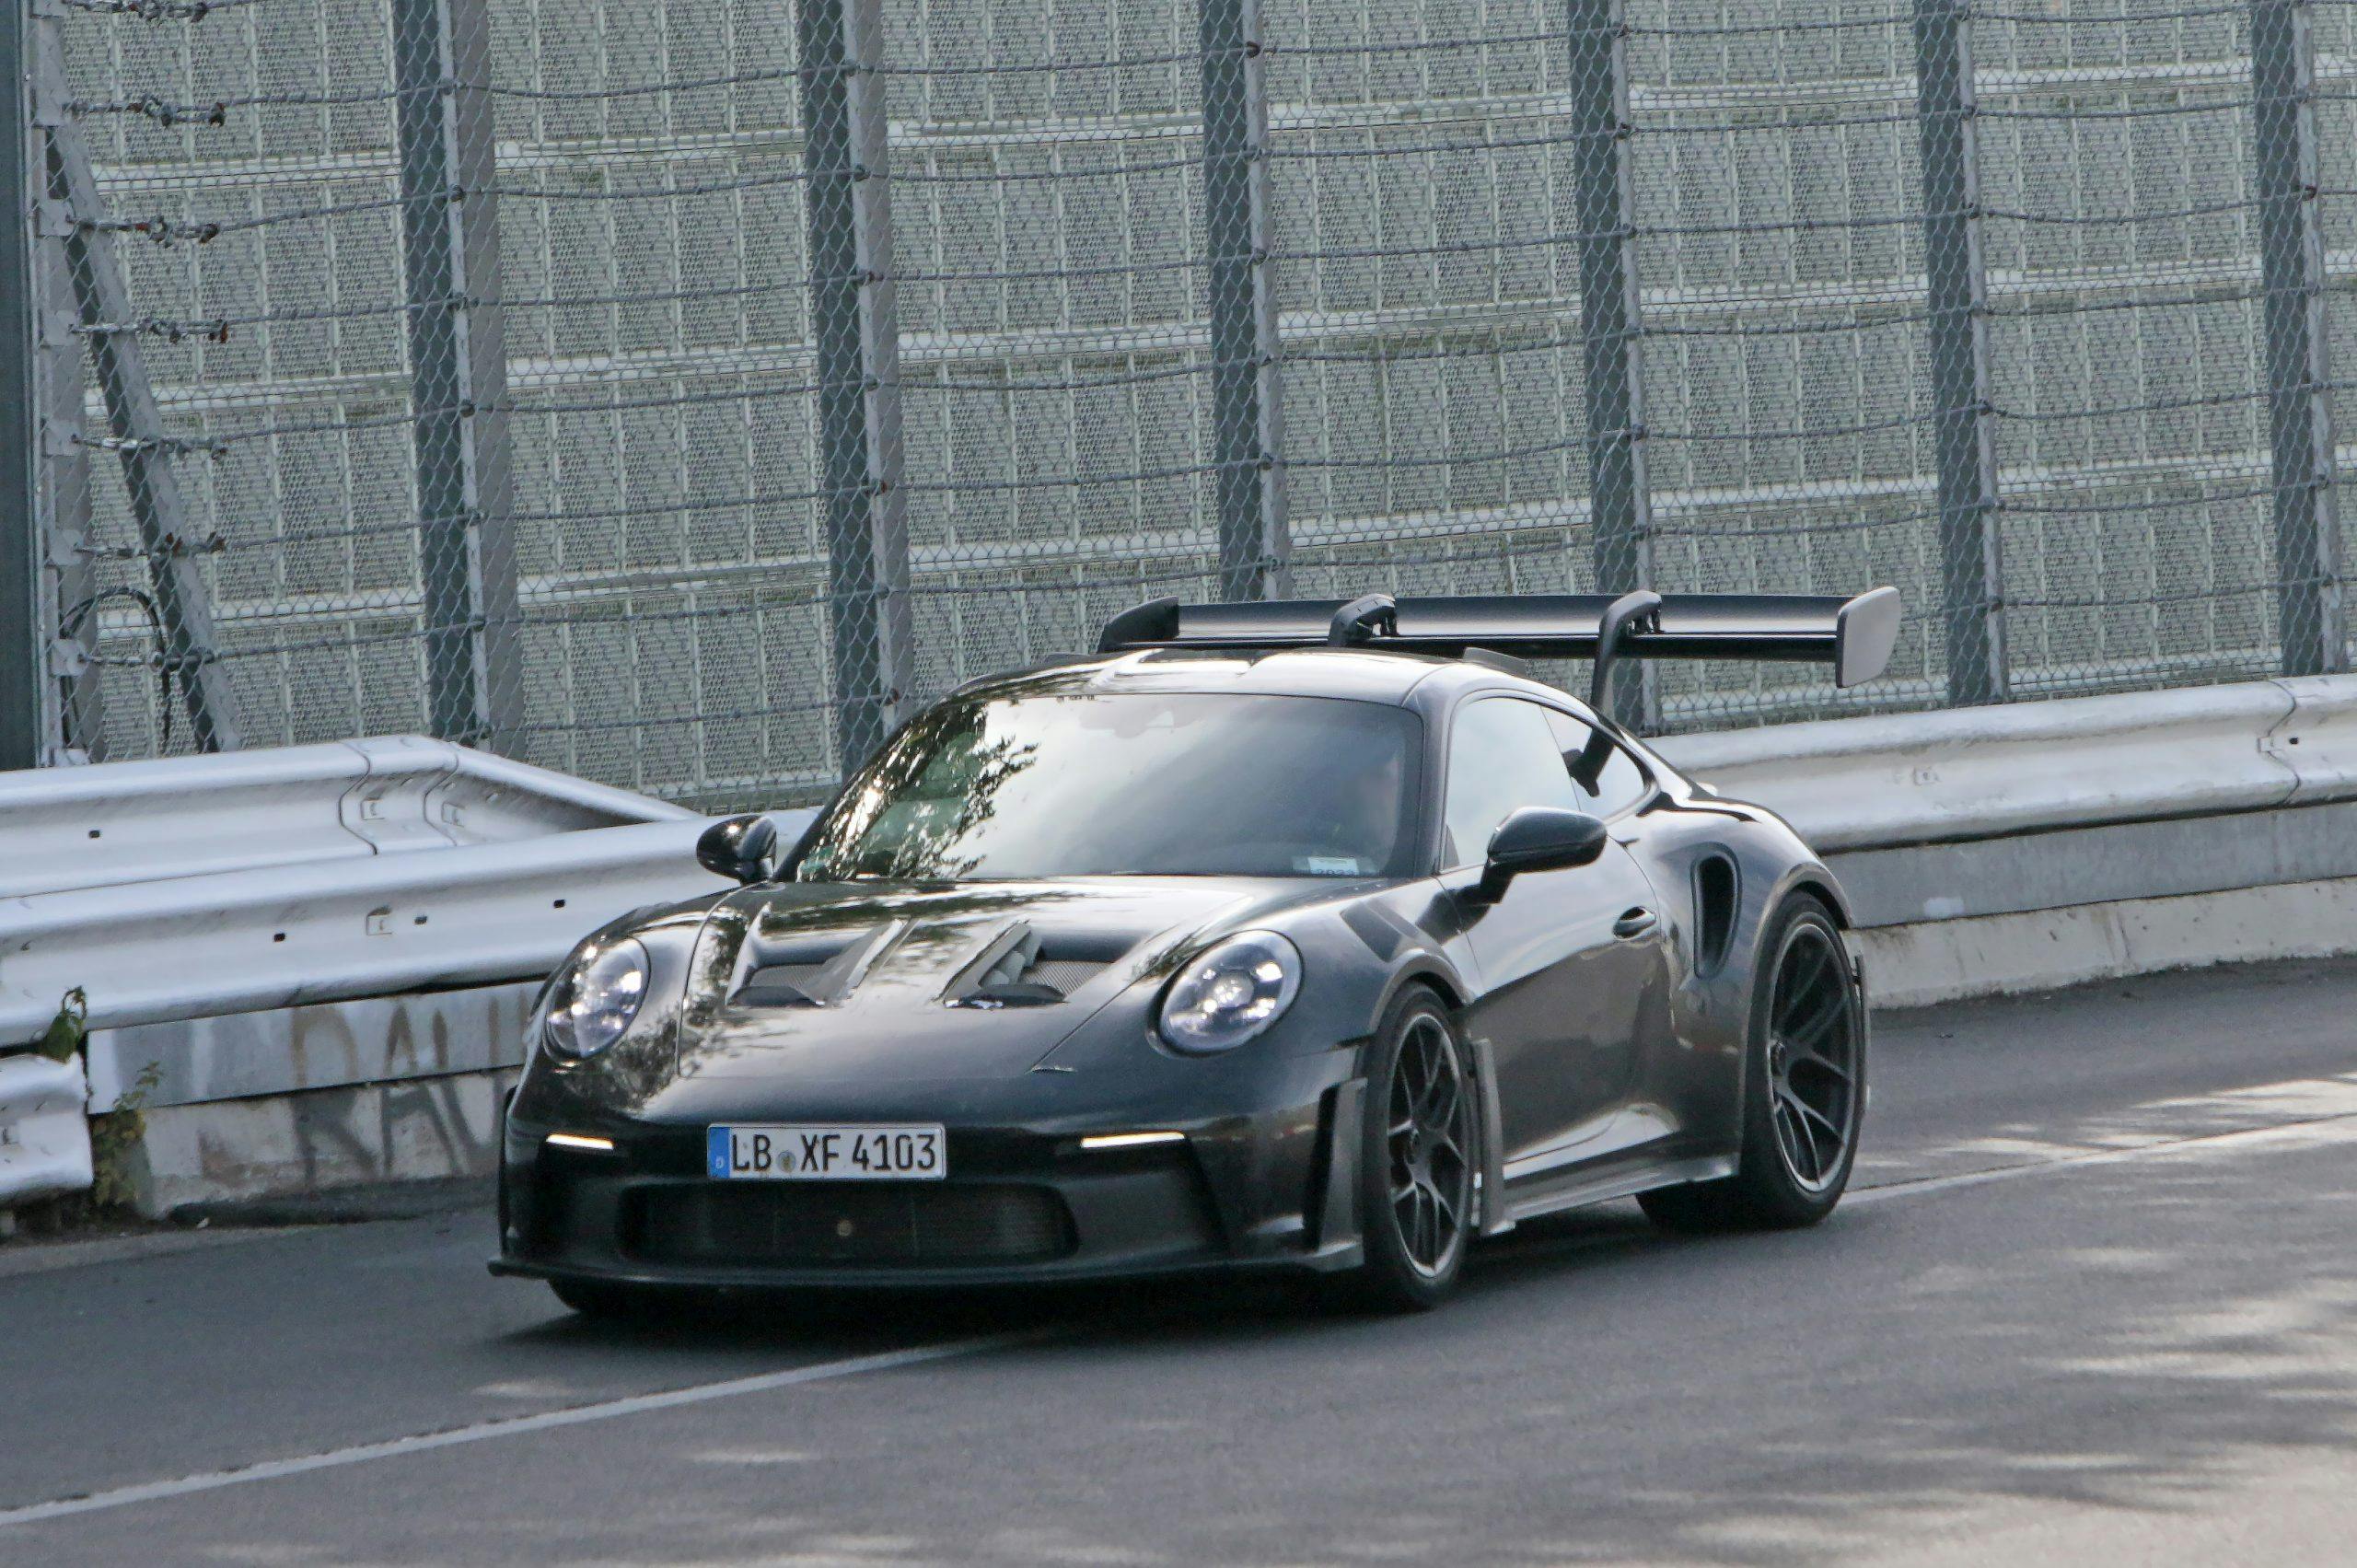 Porsche 911 GT3 RS Spy Shots exterior front three quarter